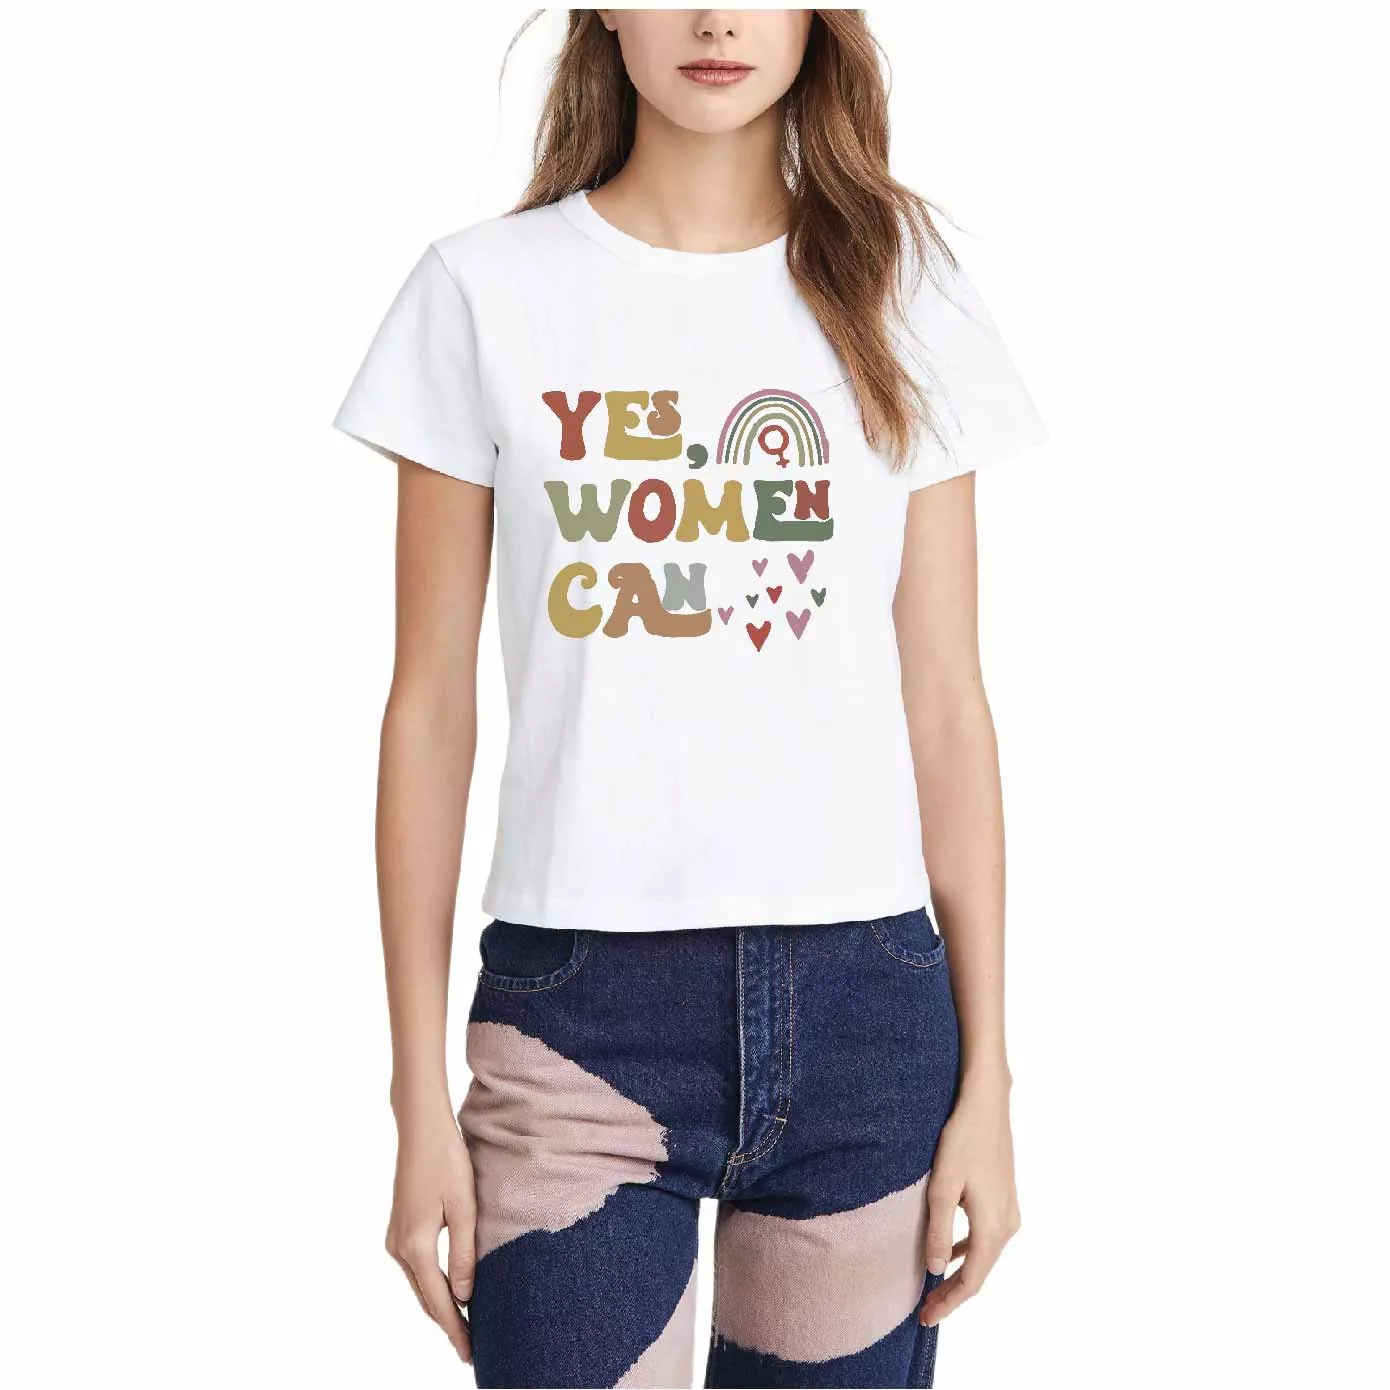 women day t shirt